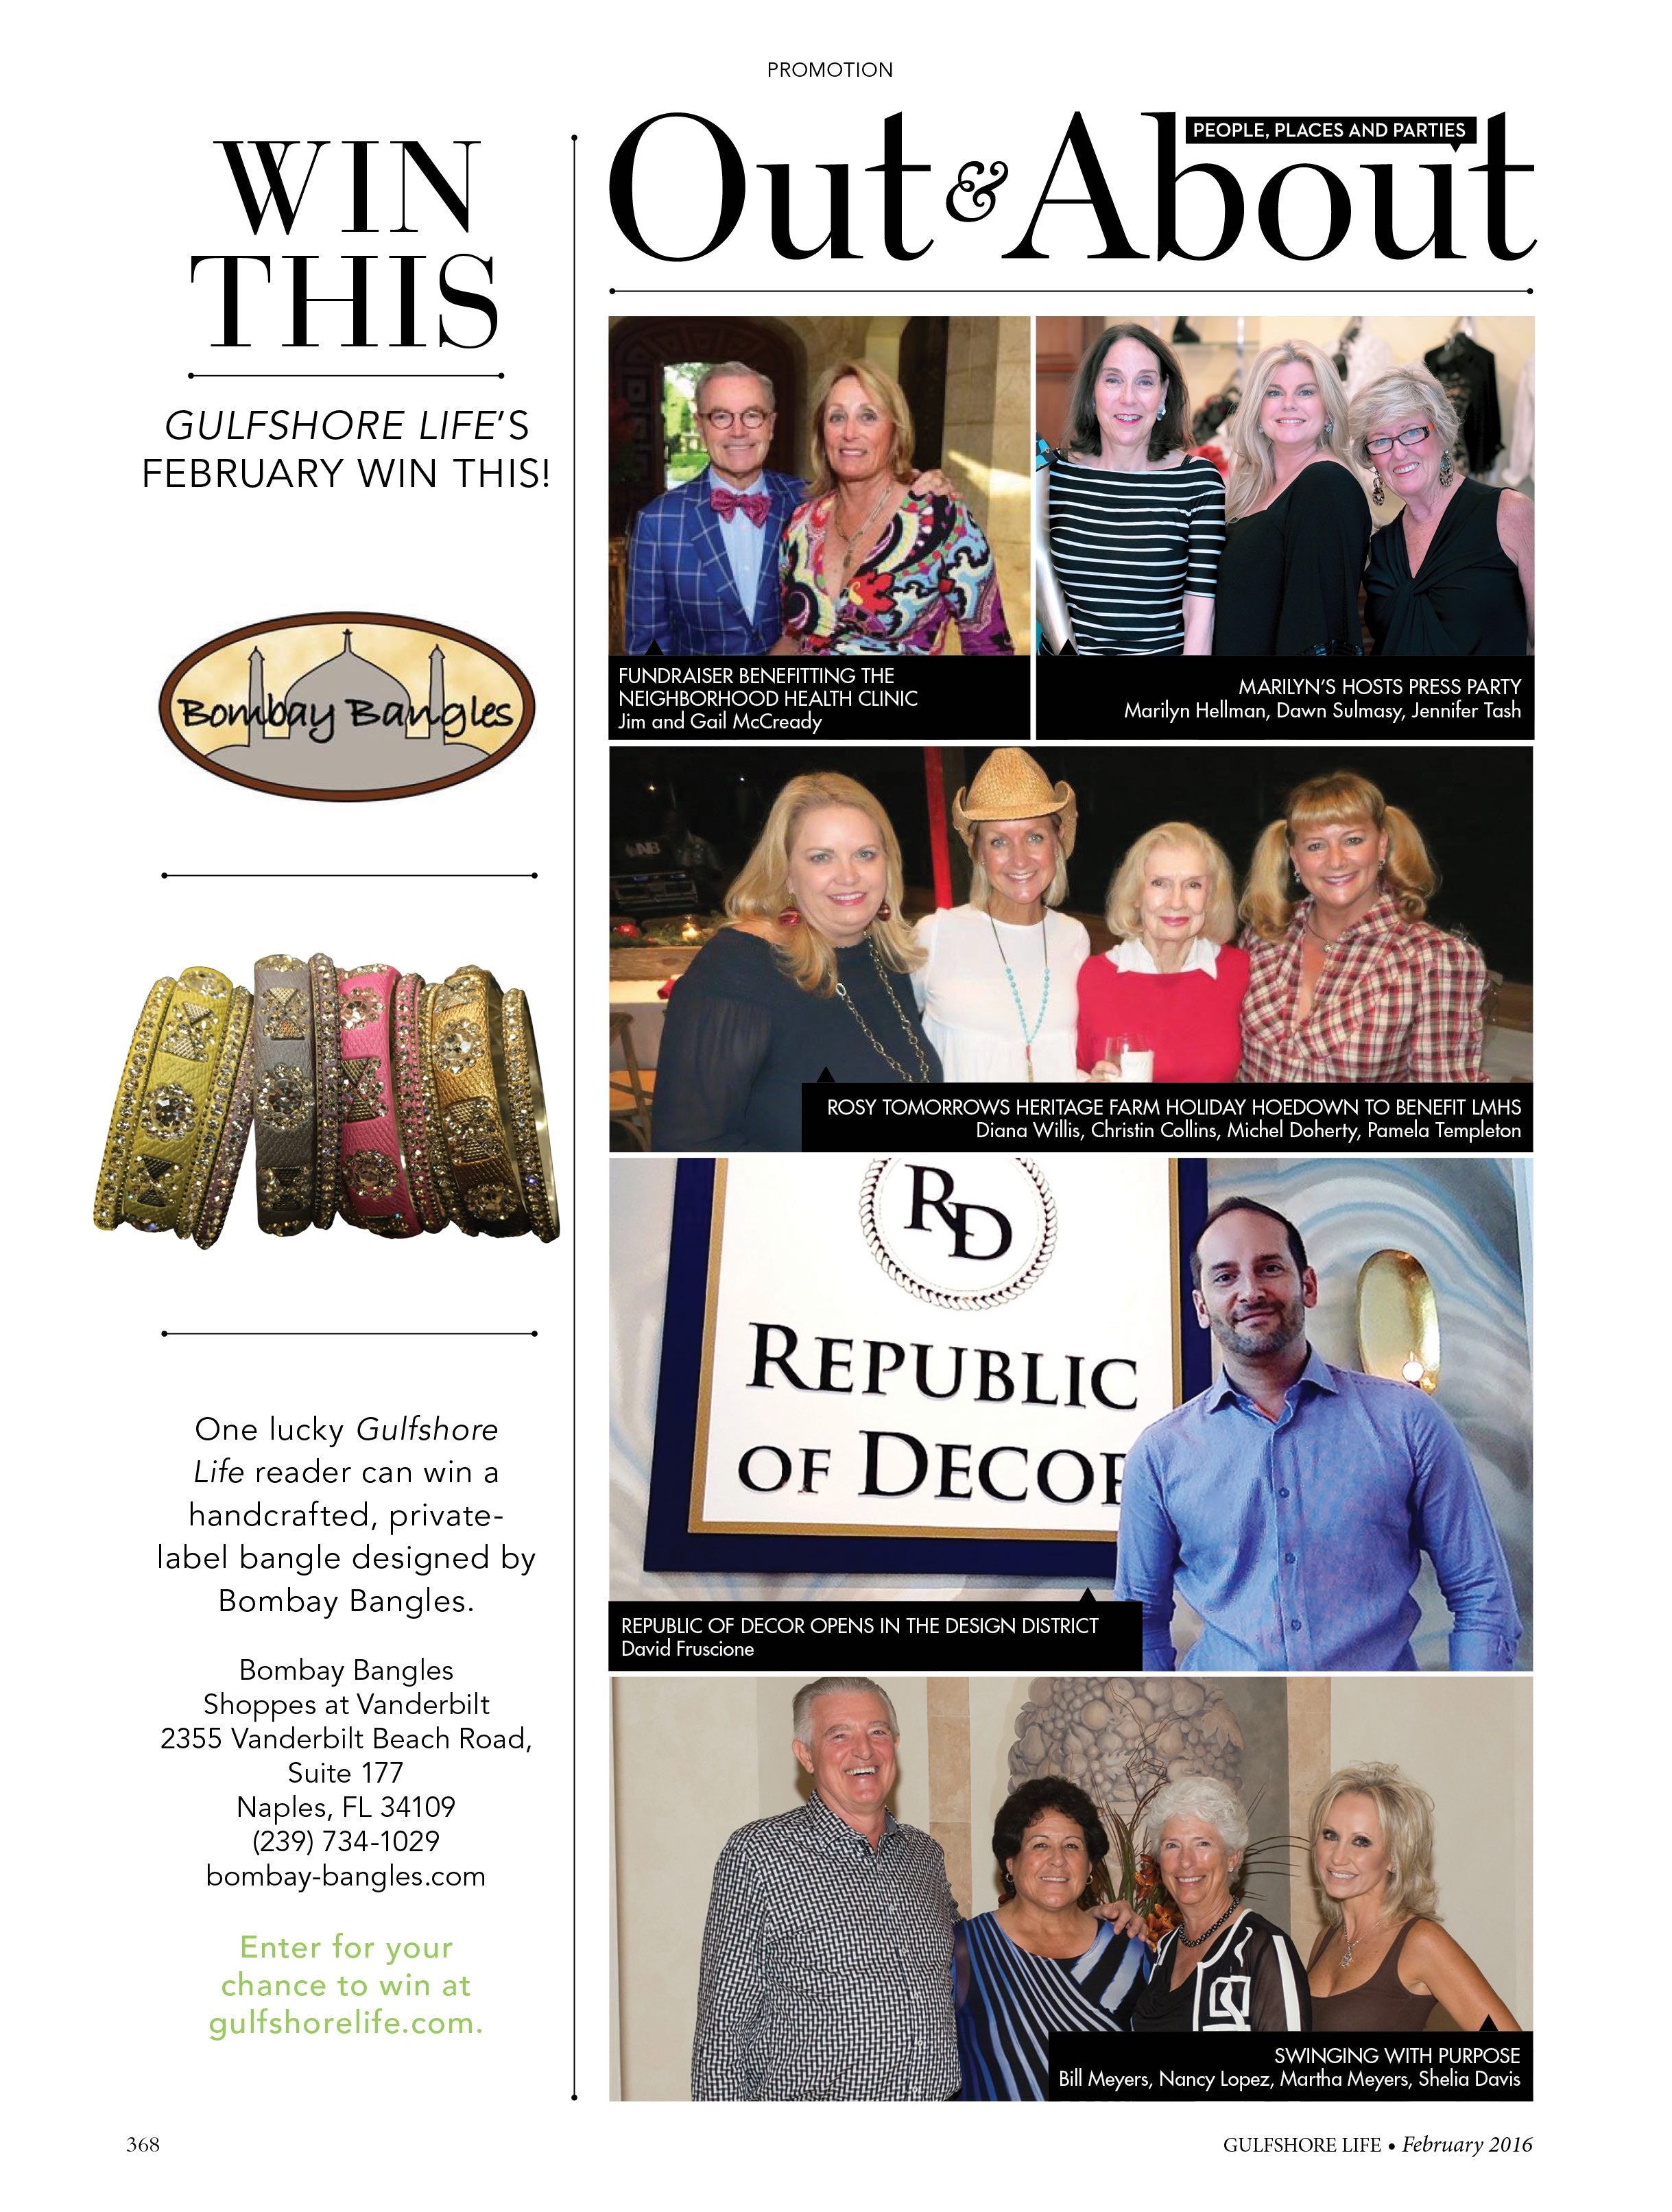 Republic of Decor opens in the Design District in Naples, Florida